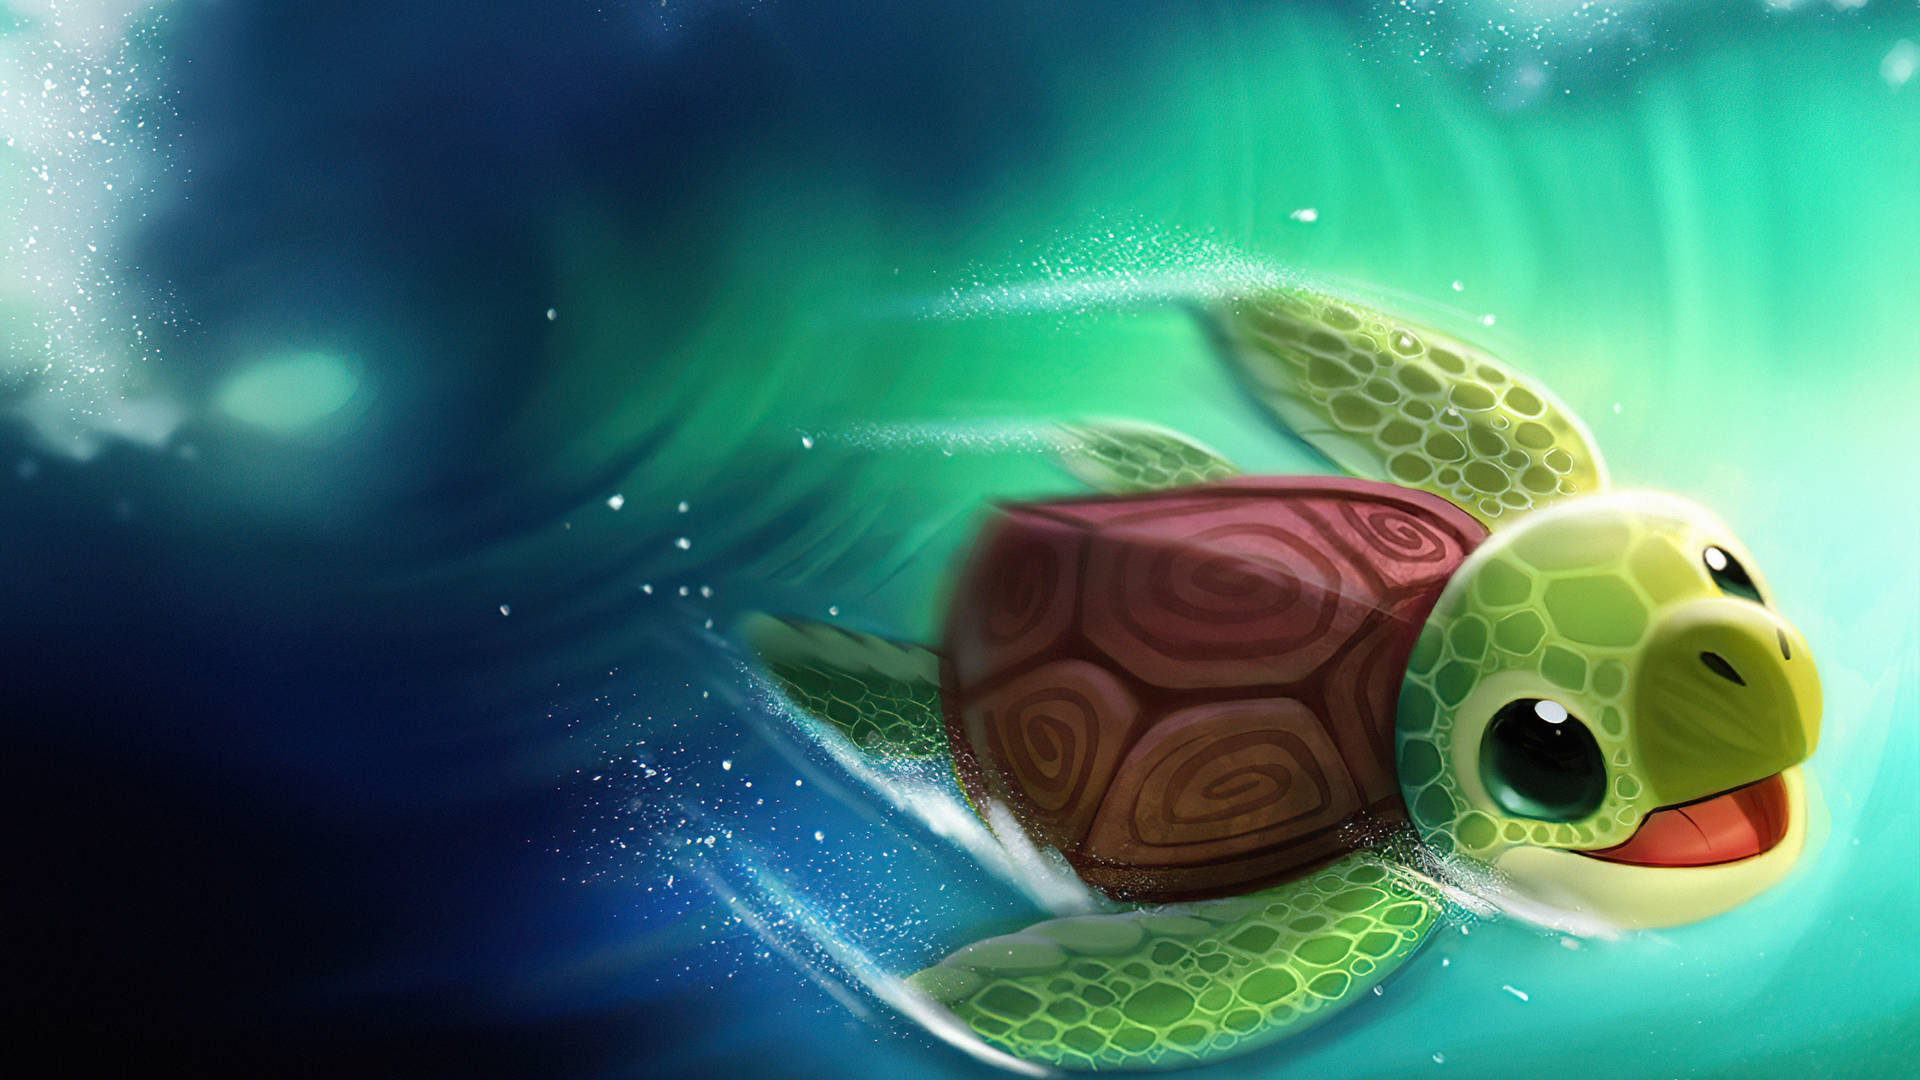 Turtle Digital Art Background